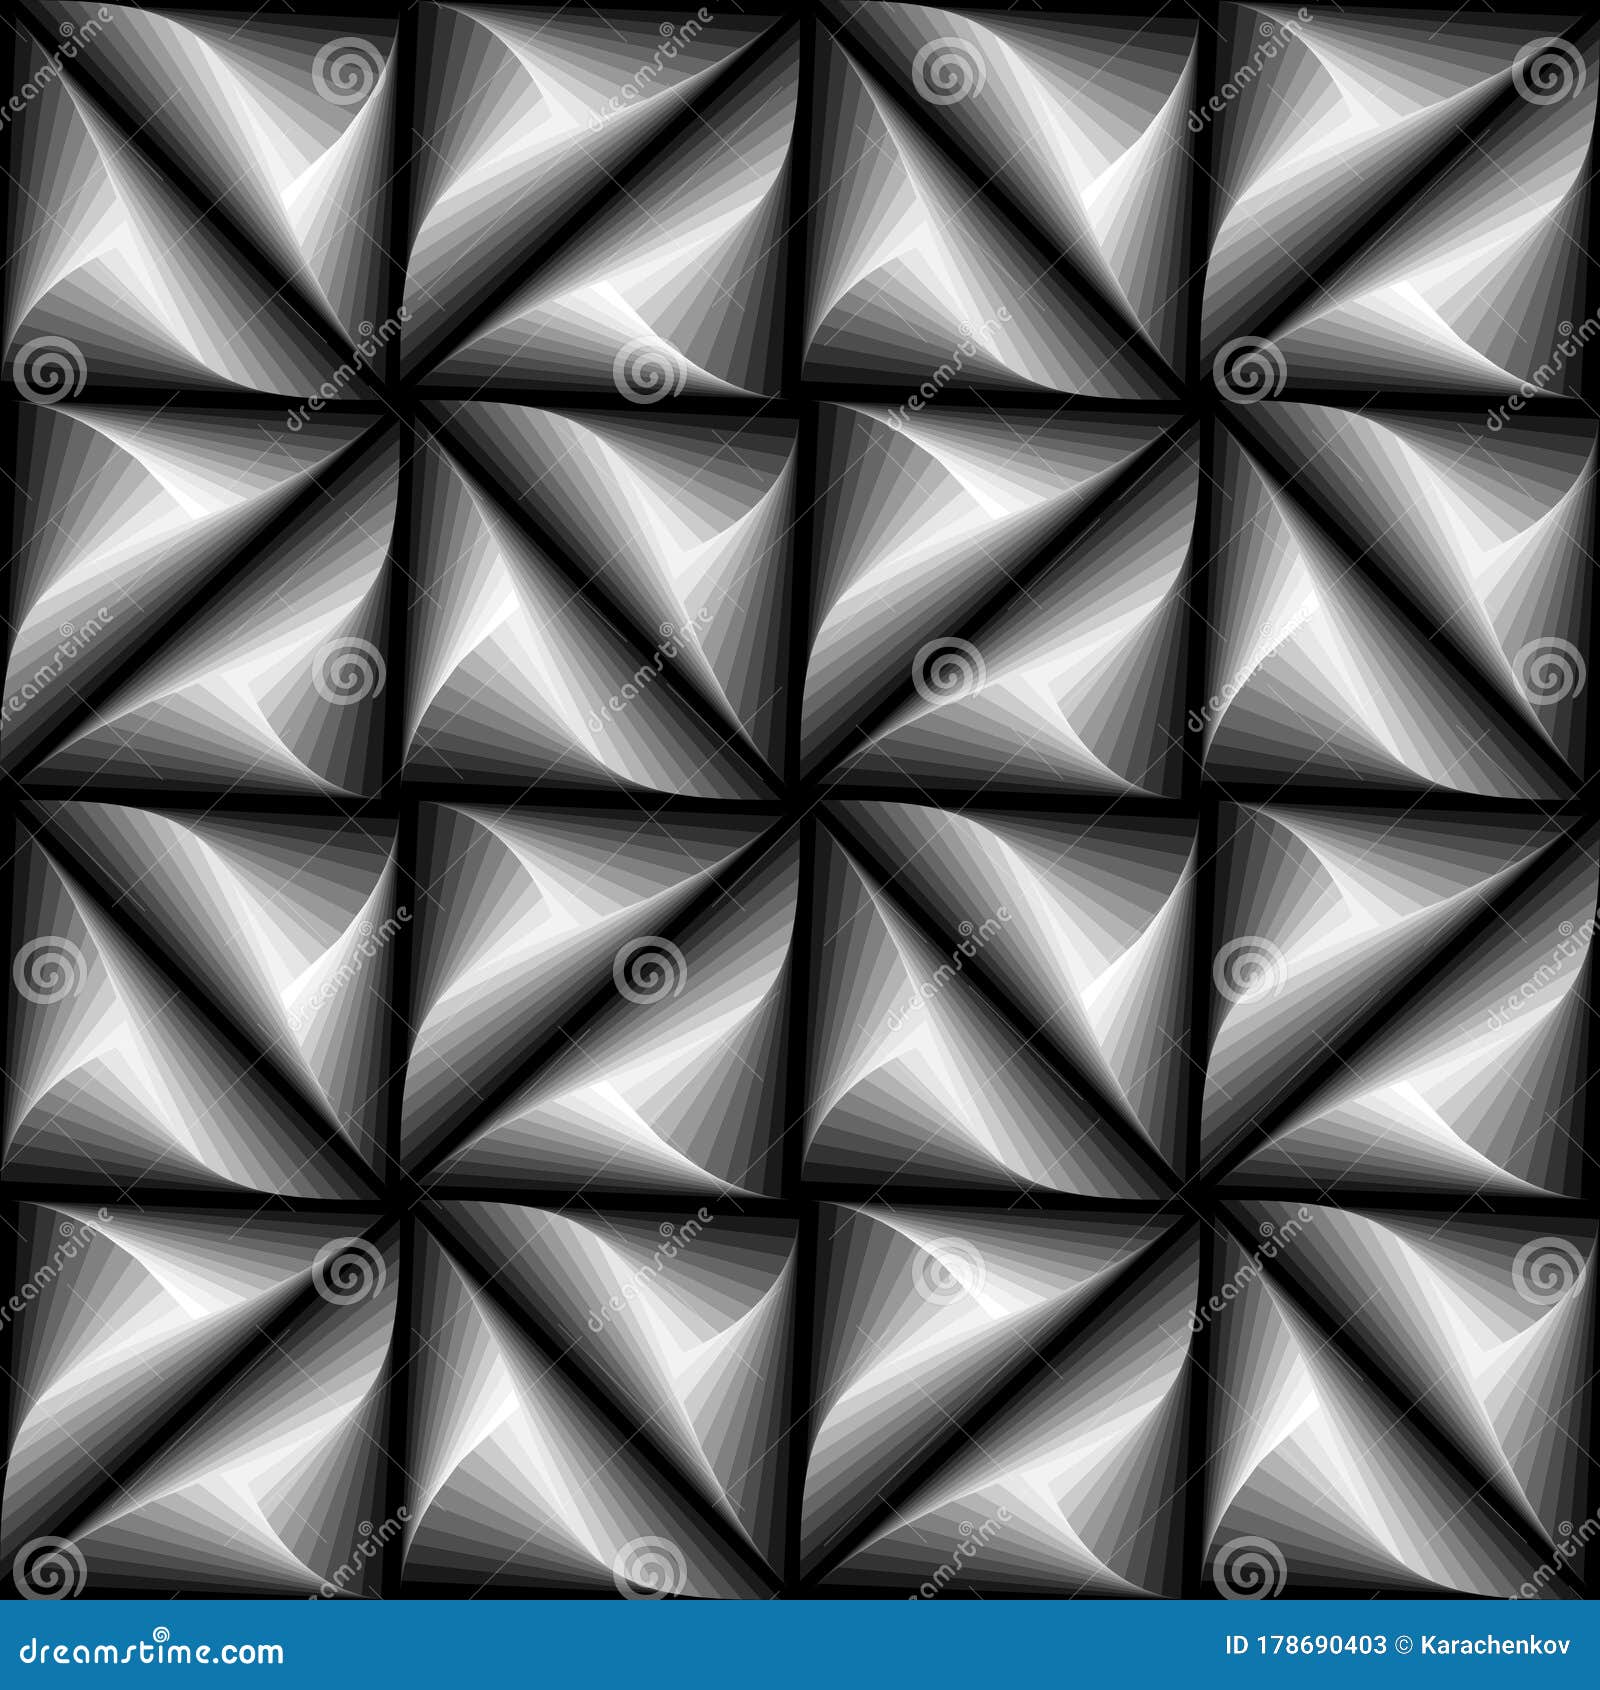 elegent monochrome 3d background seamless pattern 